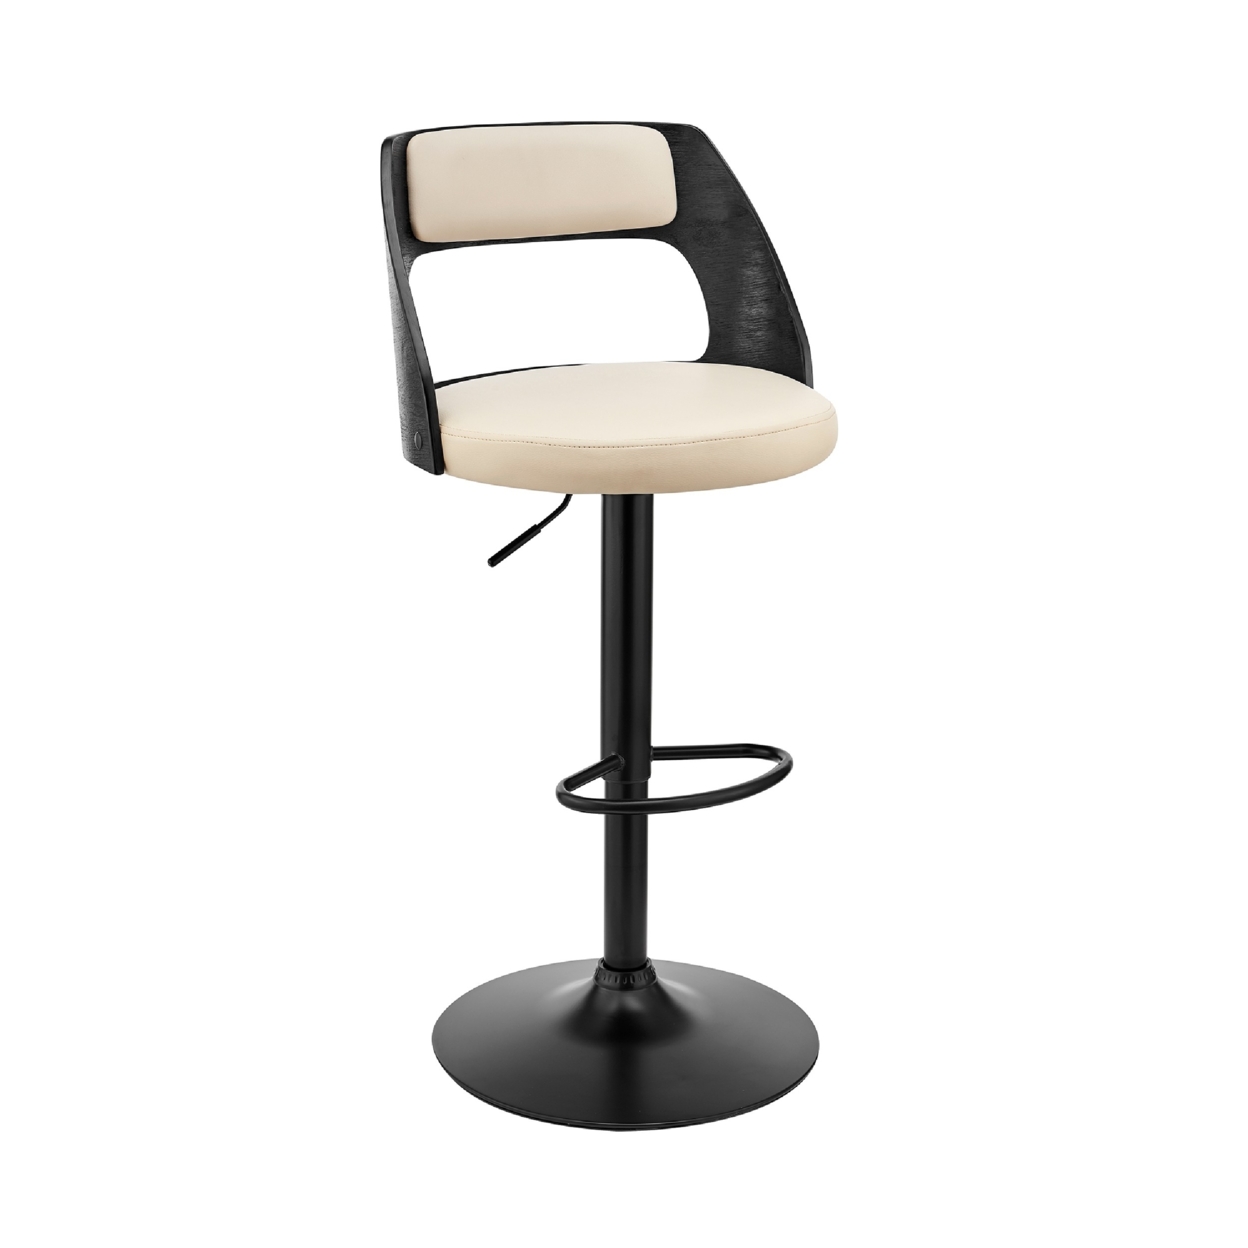 Adjustable Barstool With Open Design Wooden Back, Black And Cream- Saltoro Sherpi